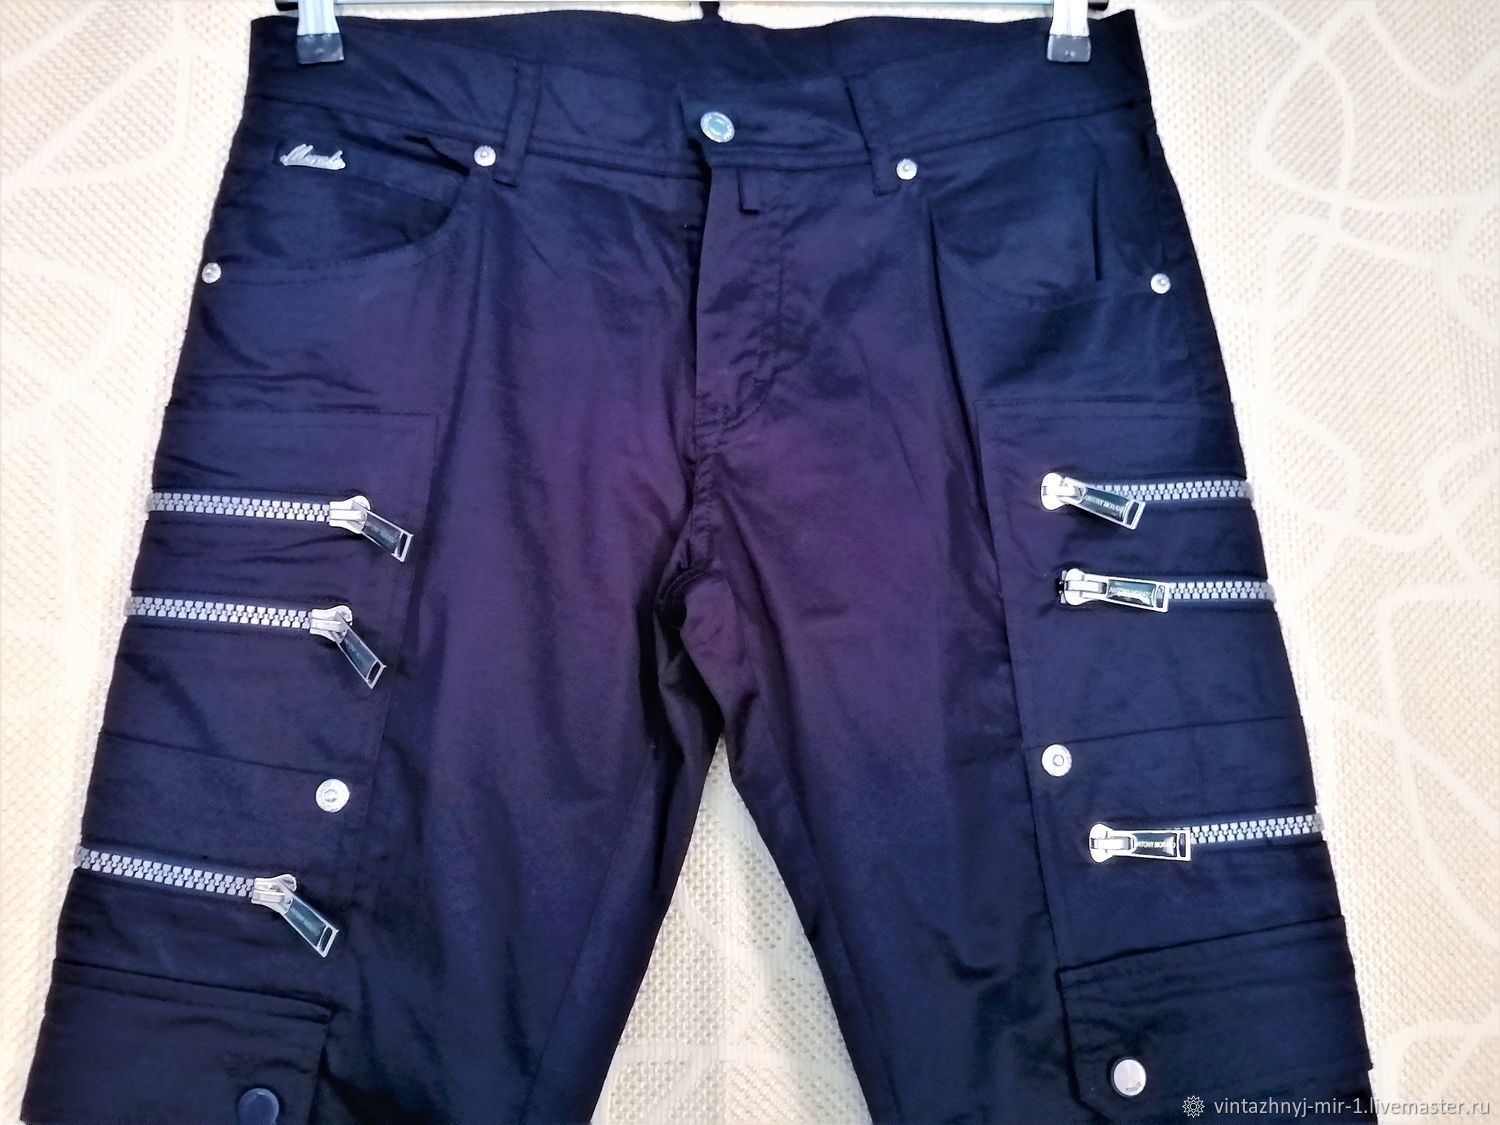 Винтаж: Одежда винтажная: брюки ANTONY MORATO, Италия, 44 размер винтернет-магазине Ярмарка Мастеров по цене 2337.5 ₽ – PXNP6RU